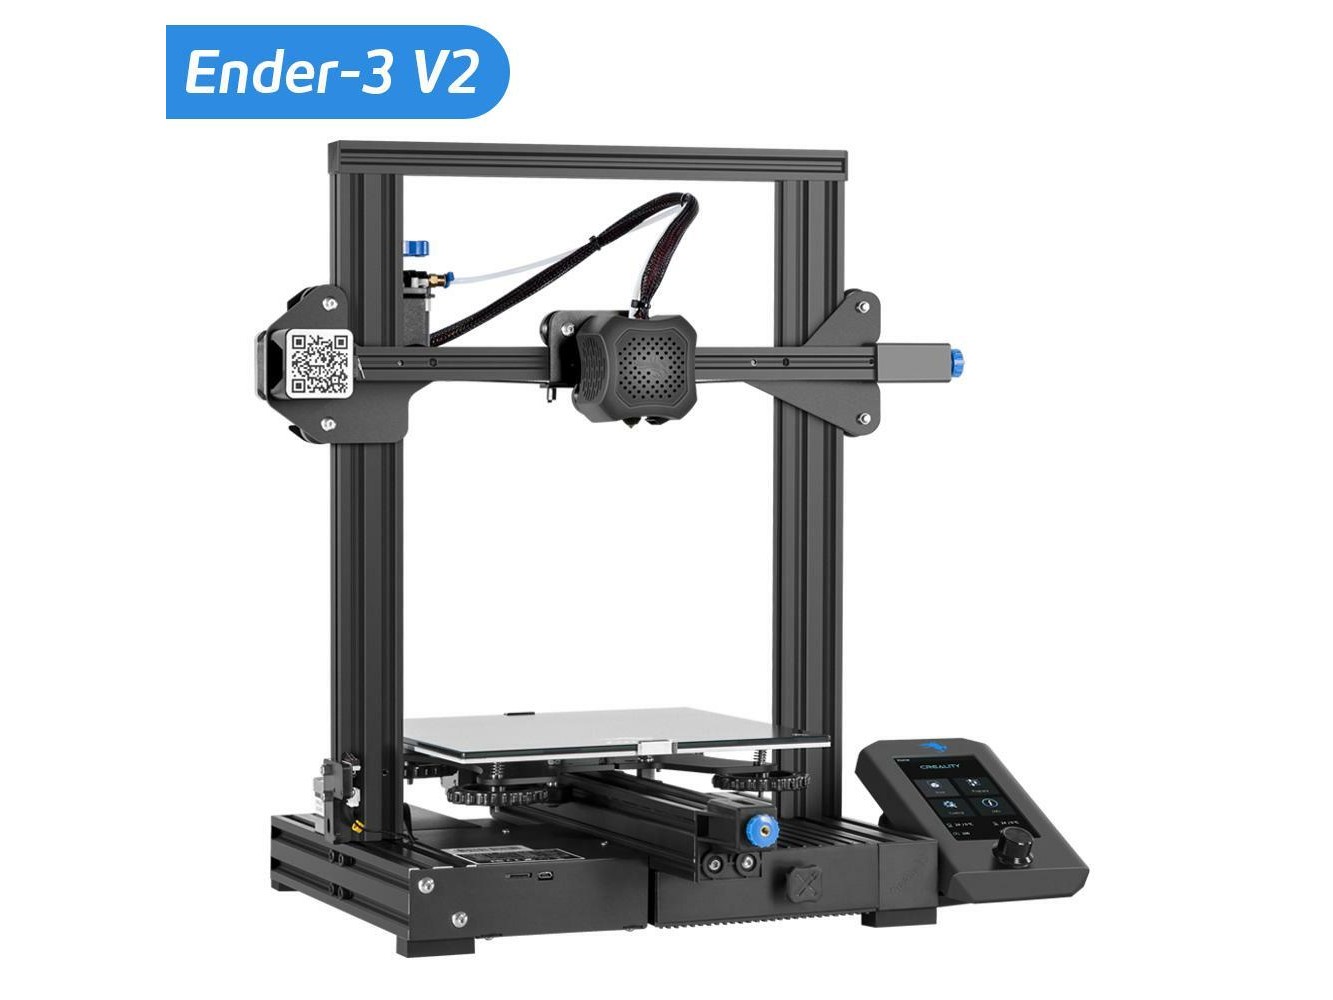 Creality Ender 2 (Kit) review - Hobbyist 3D printer